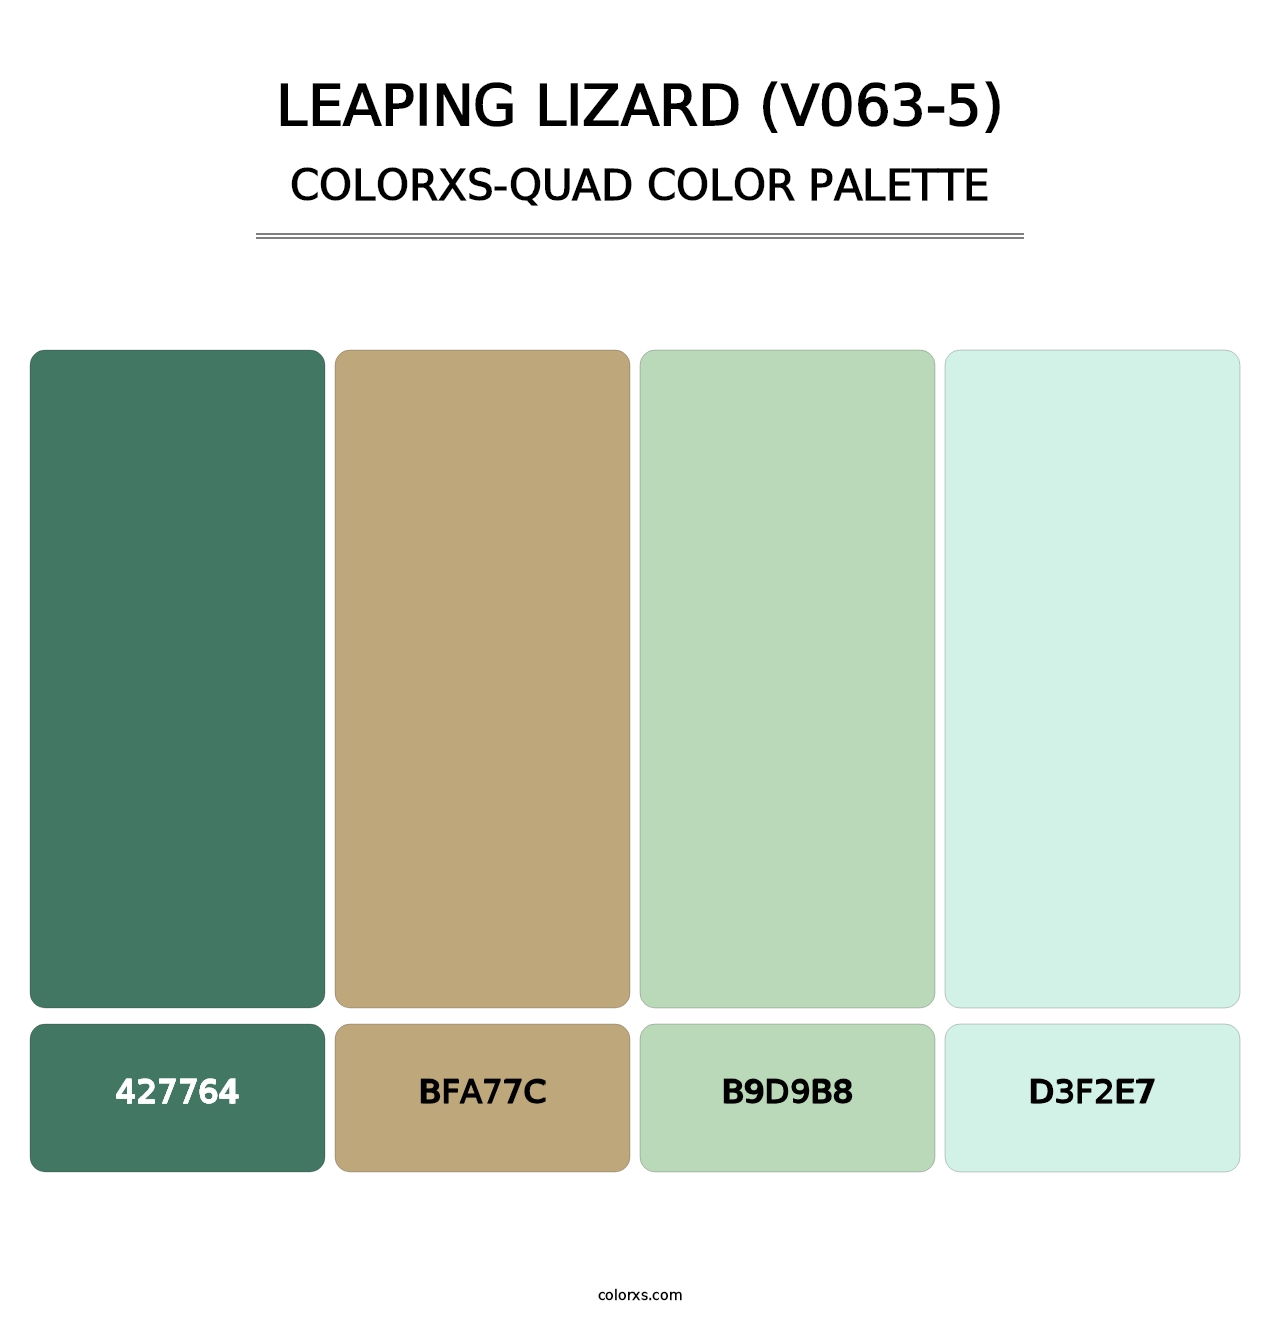 Leaping Lizard (V063-5) - Colorxs Quad Palette